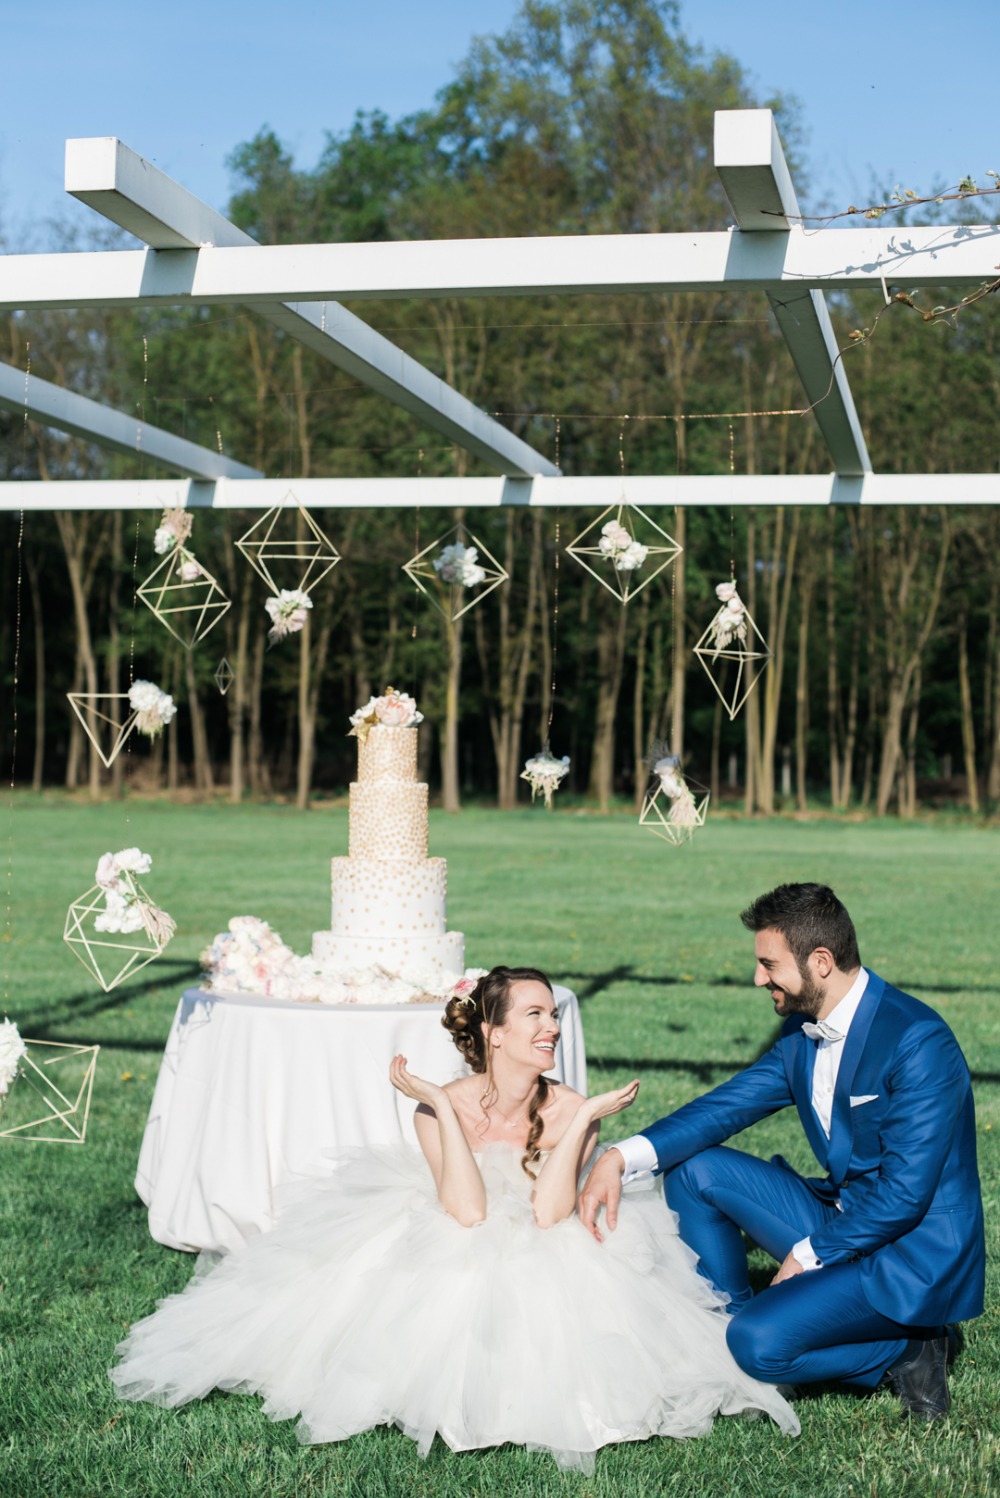 outdoor wedding cake display with hanging geometric backdrop